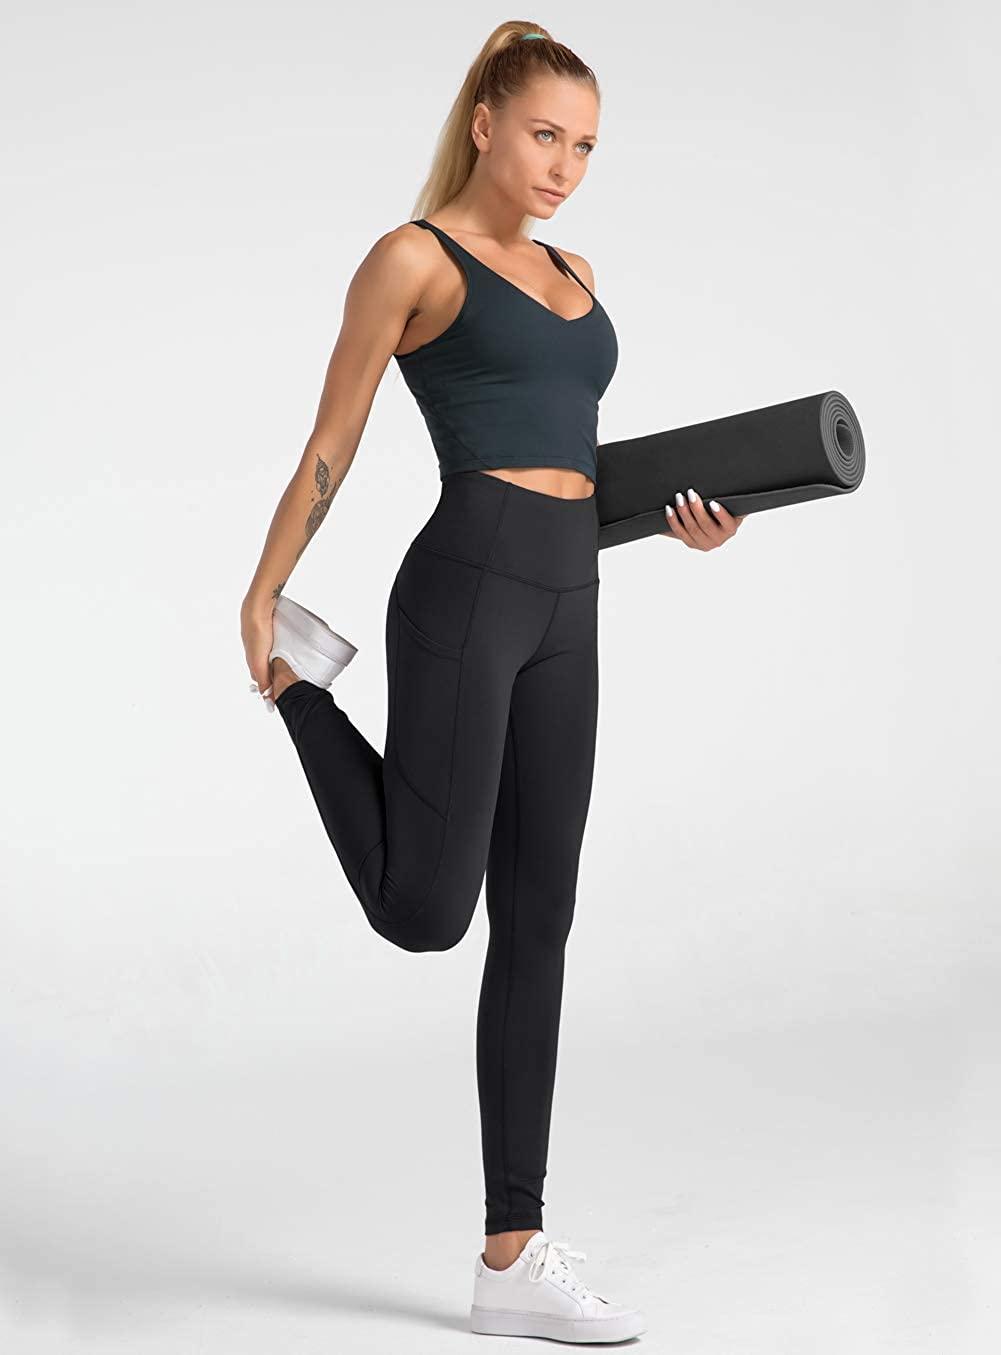 Bodychum High Waist Yoga Leggings with 3 Pockets, Tummy Control Workout  Running 4 Way Stretch Yoga Pants Fitness Capris Pants- XL